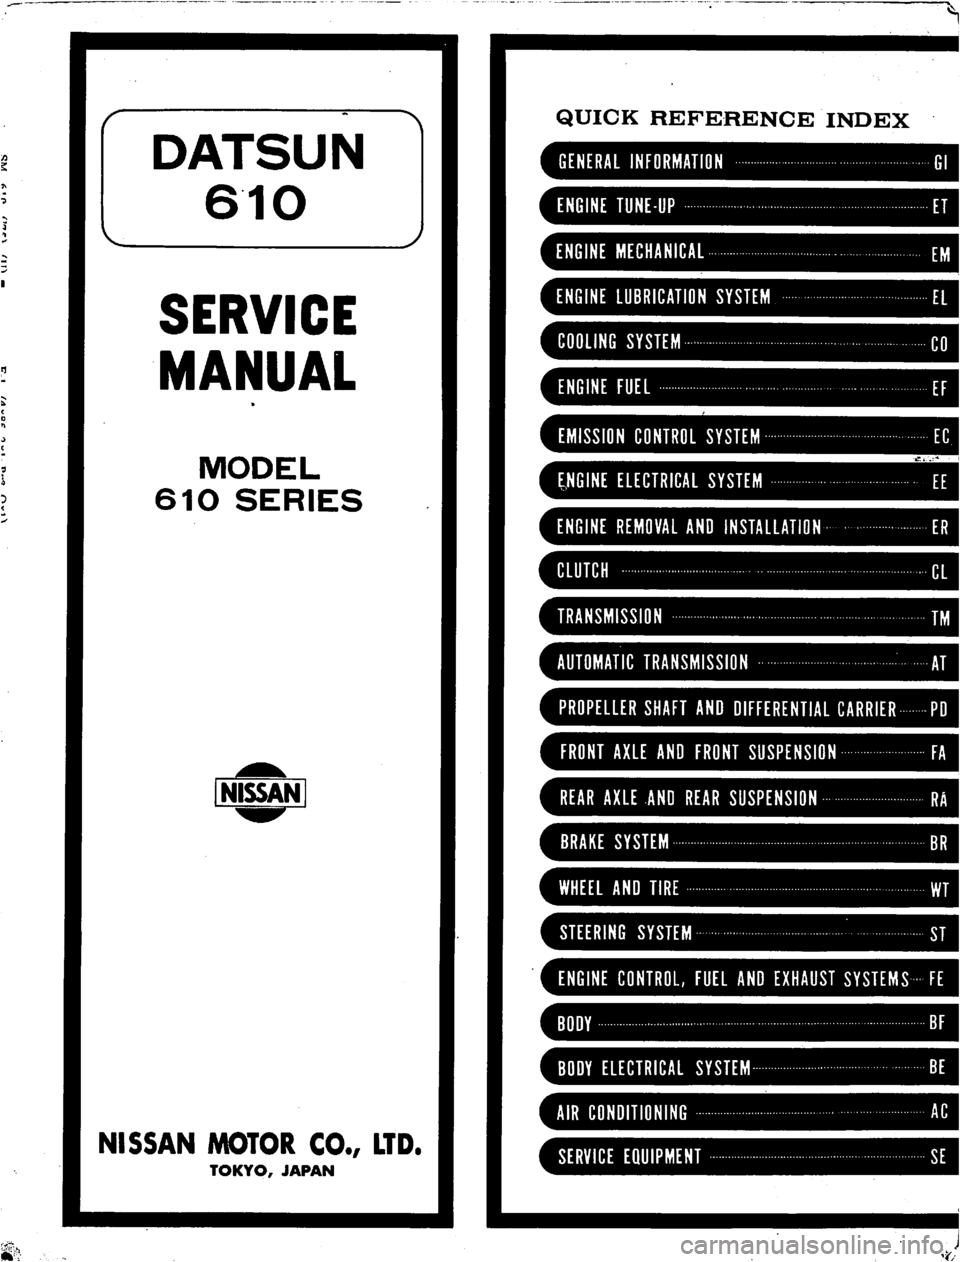 DATSUN 610 1975  Service Manual 